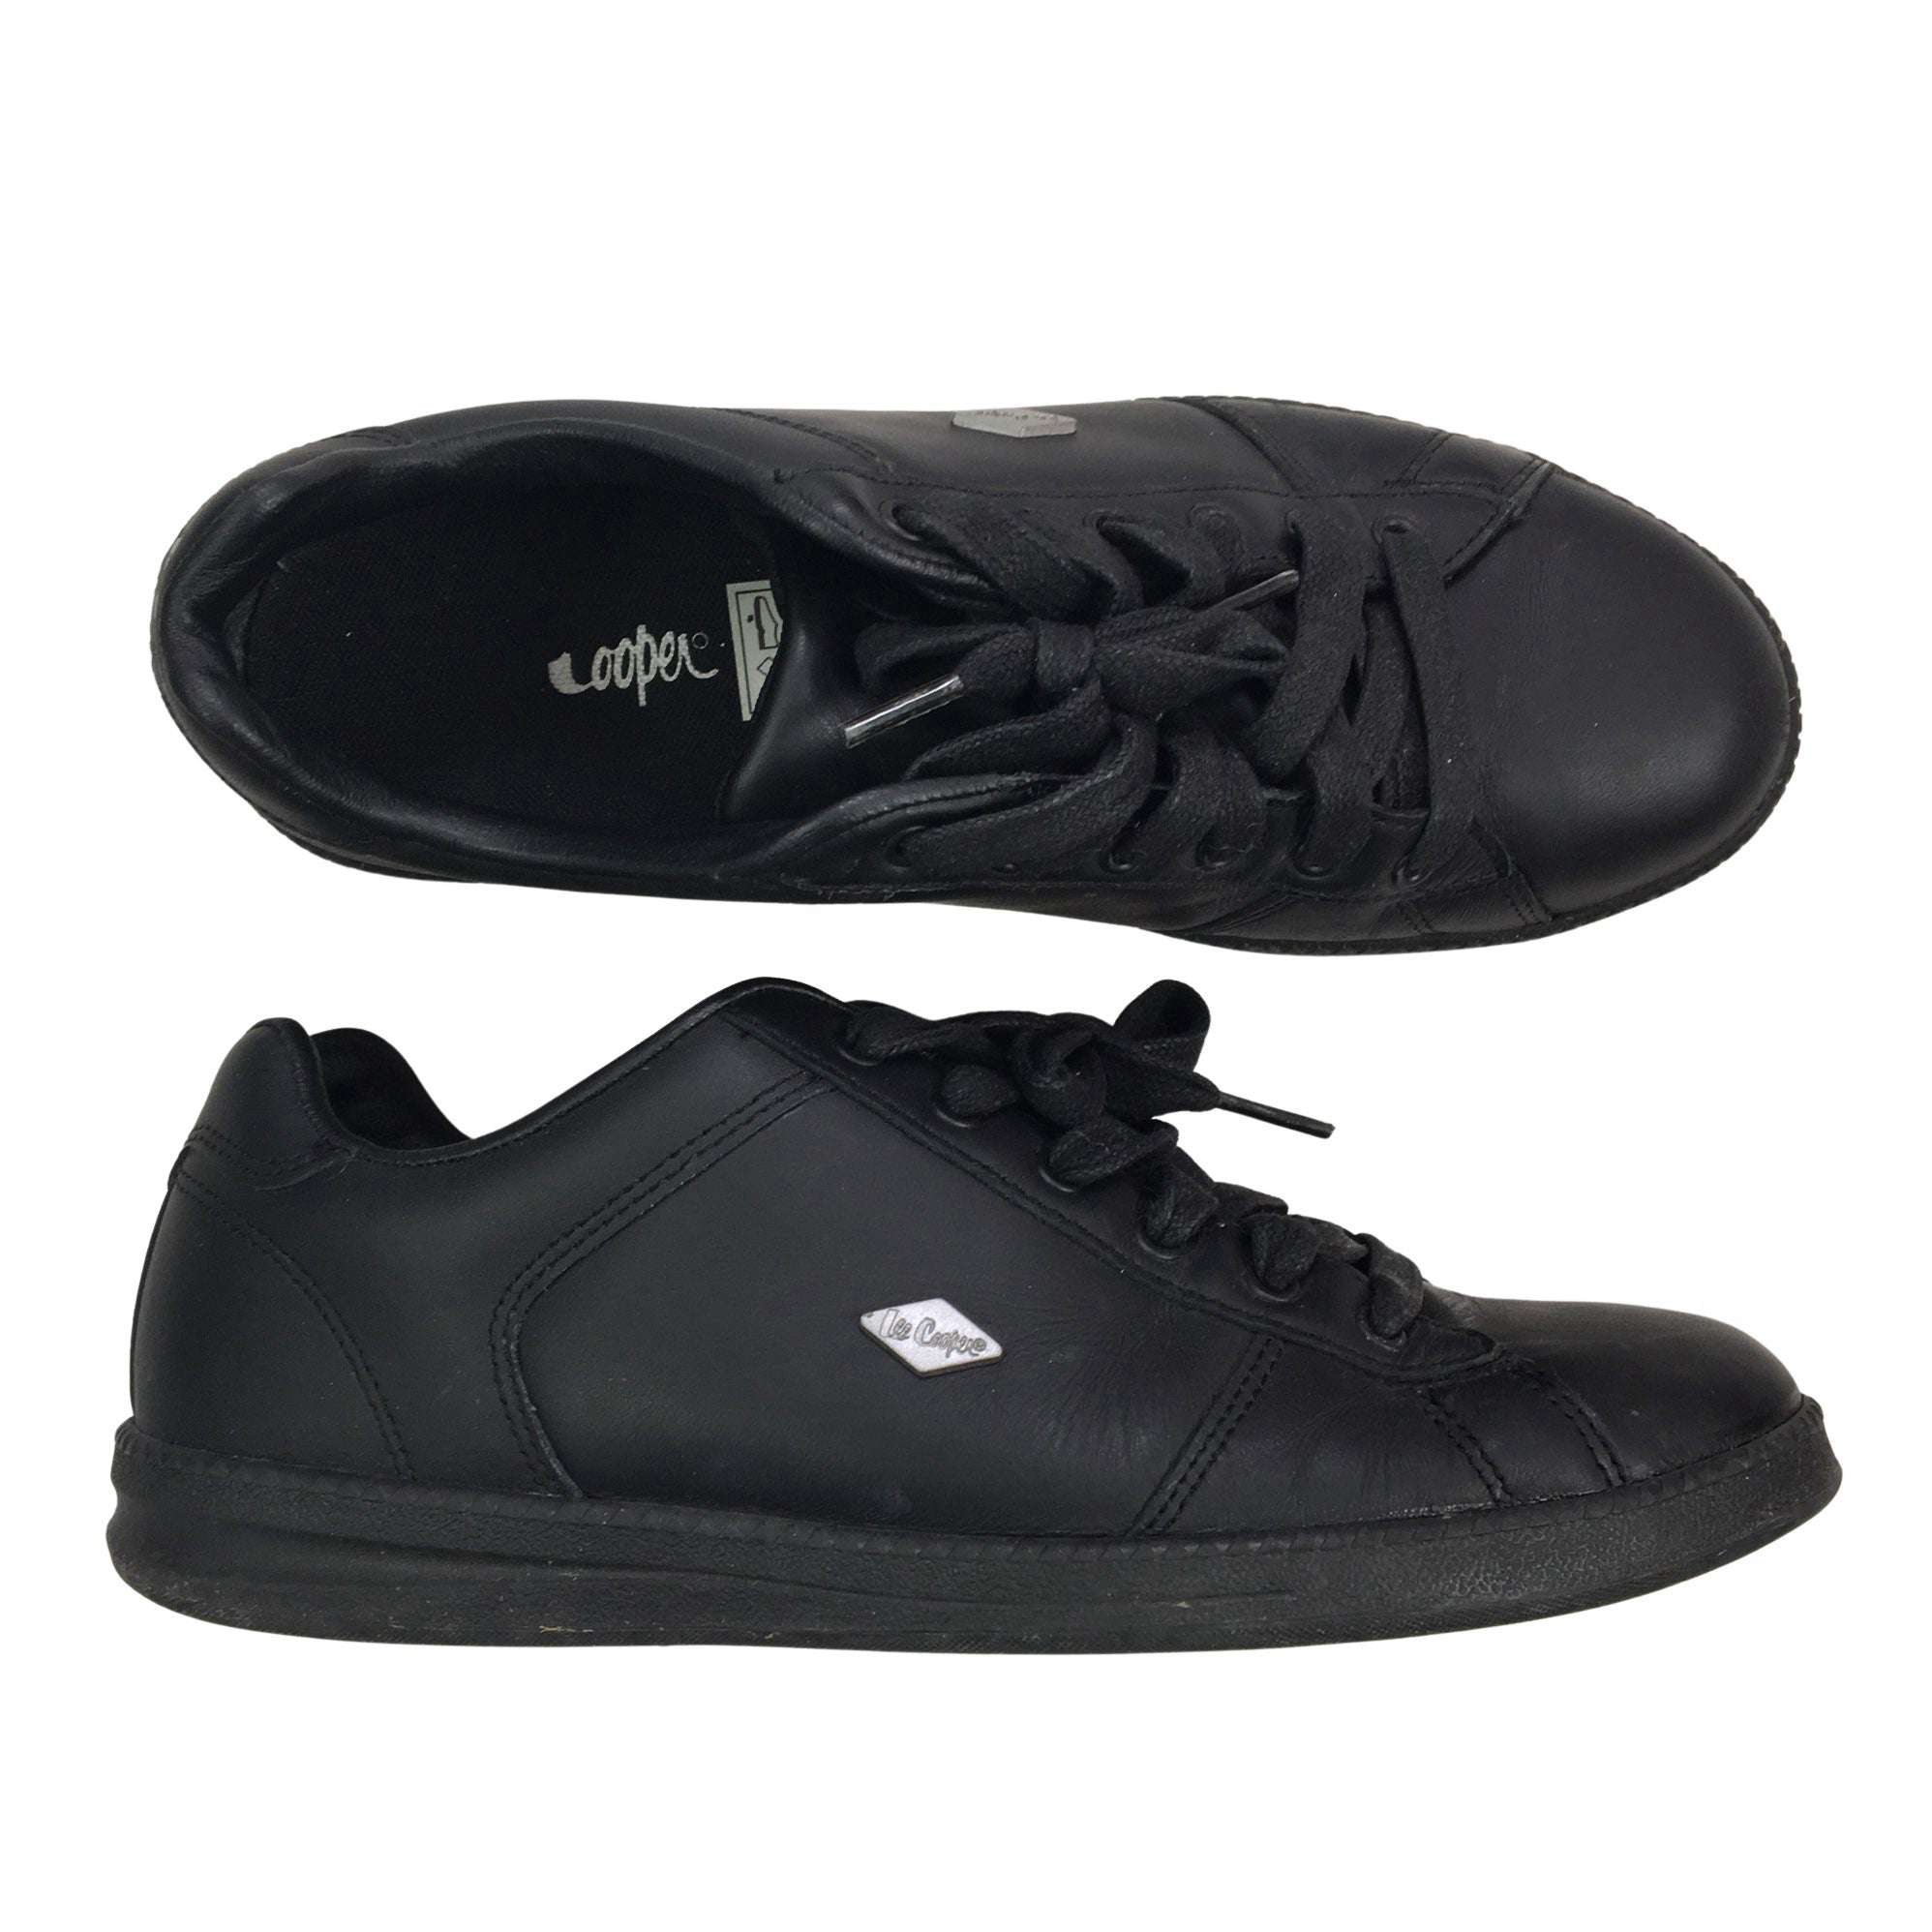 Buy Lee Cooper Grey Sneakers - 6 UK (40 EU) (7 US) (LC1983A) at Amazon.in